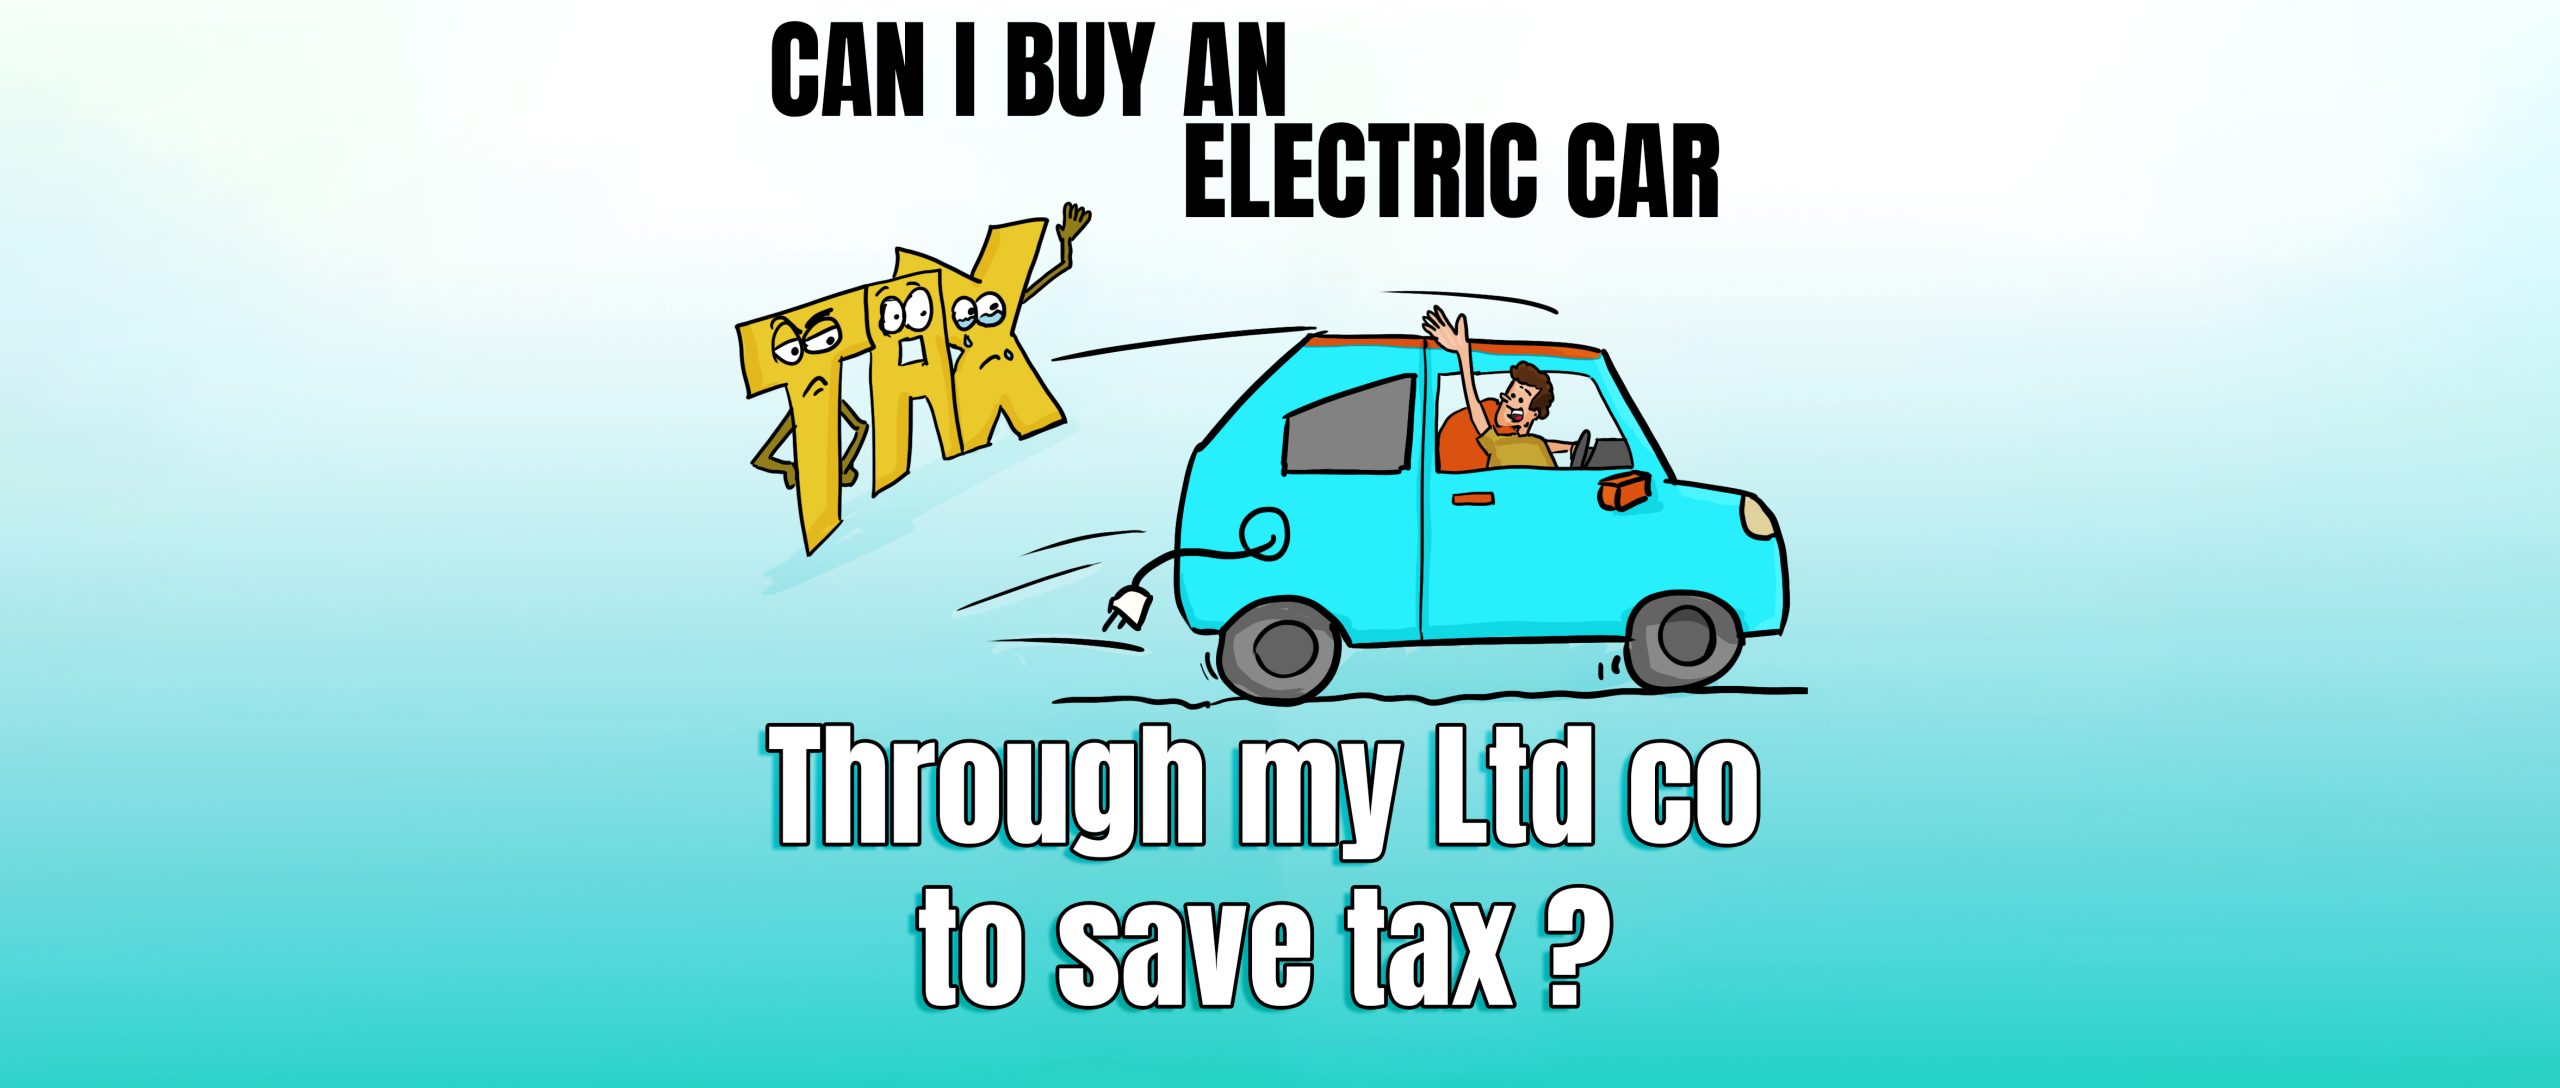 Can I buy an Electric Car through my Ltd Co & save tax